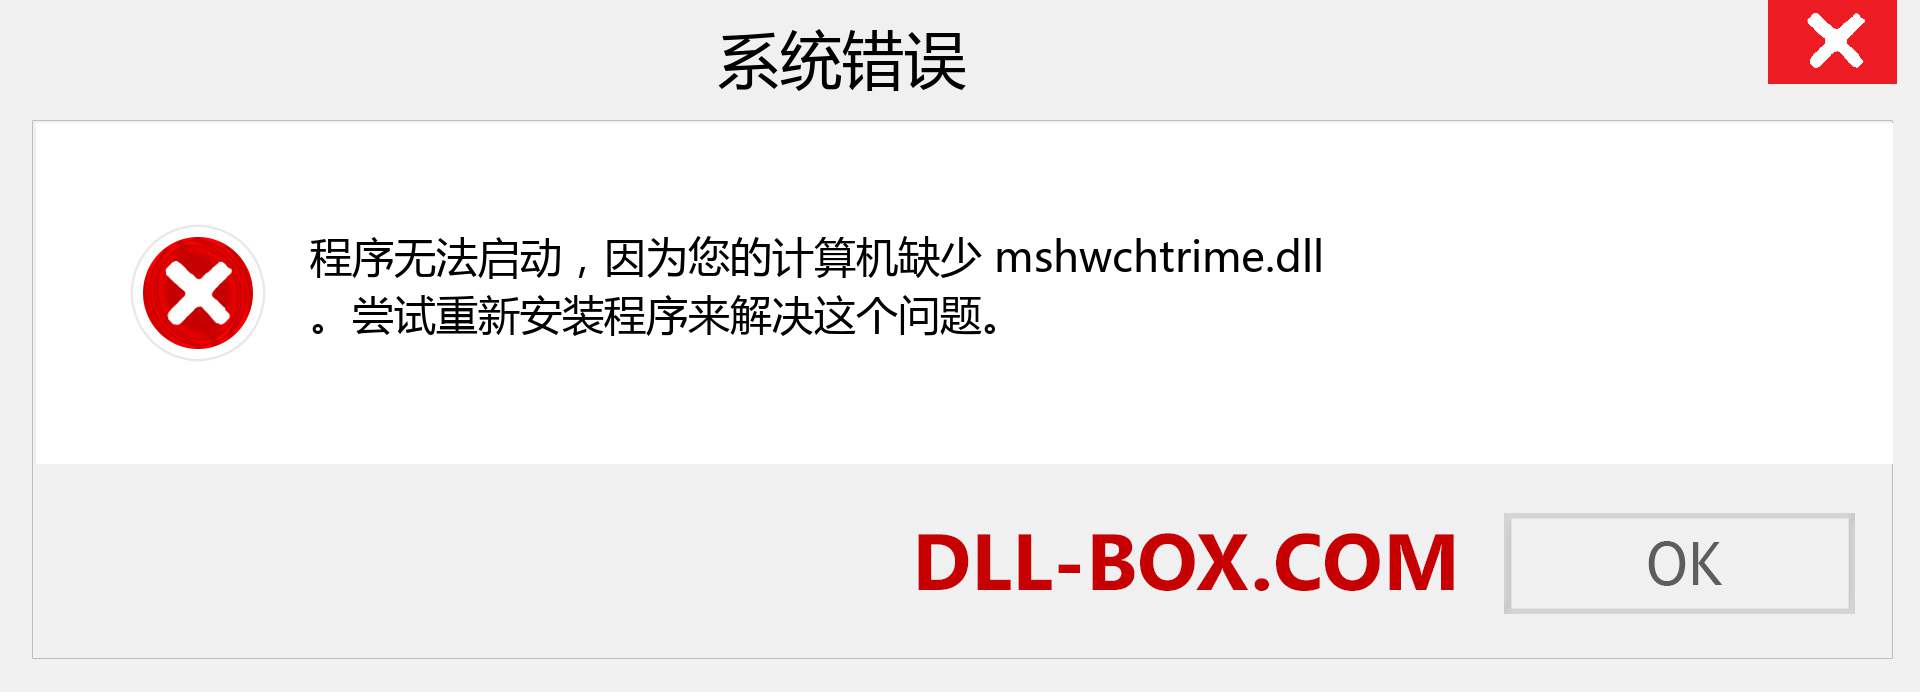 mshwchtrime.dll 文件丢失？。 适用于 Windows 7、8、10 的下载 - 修复 Windows、照片、图像上的 mshwchtrime dll 丢失错误